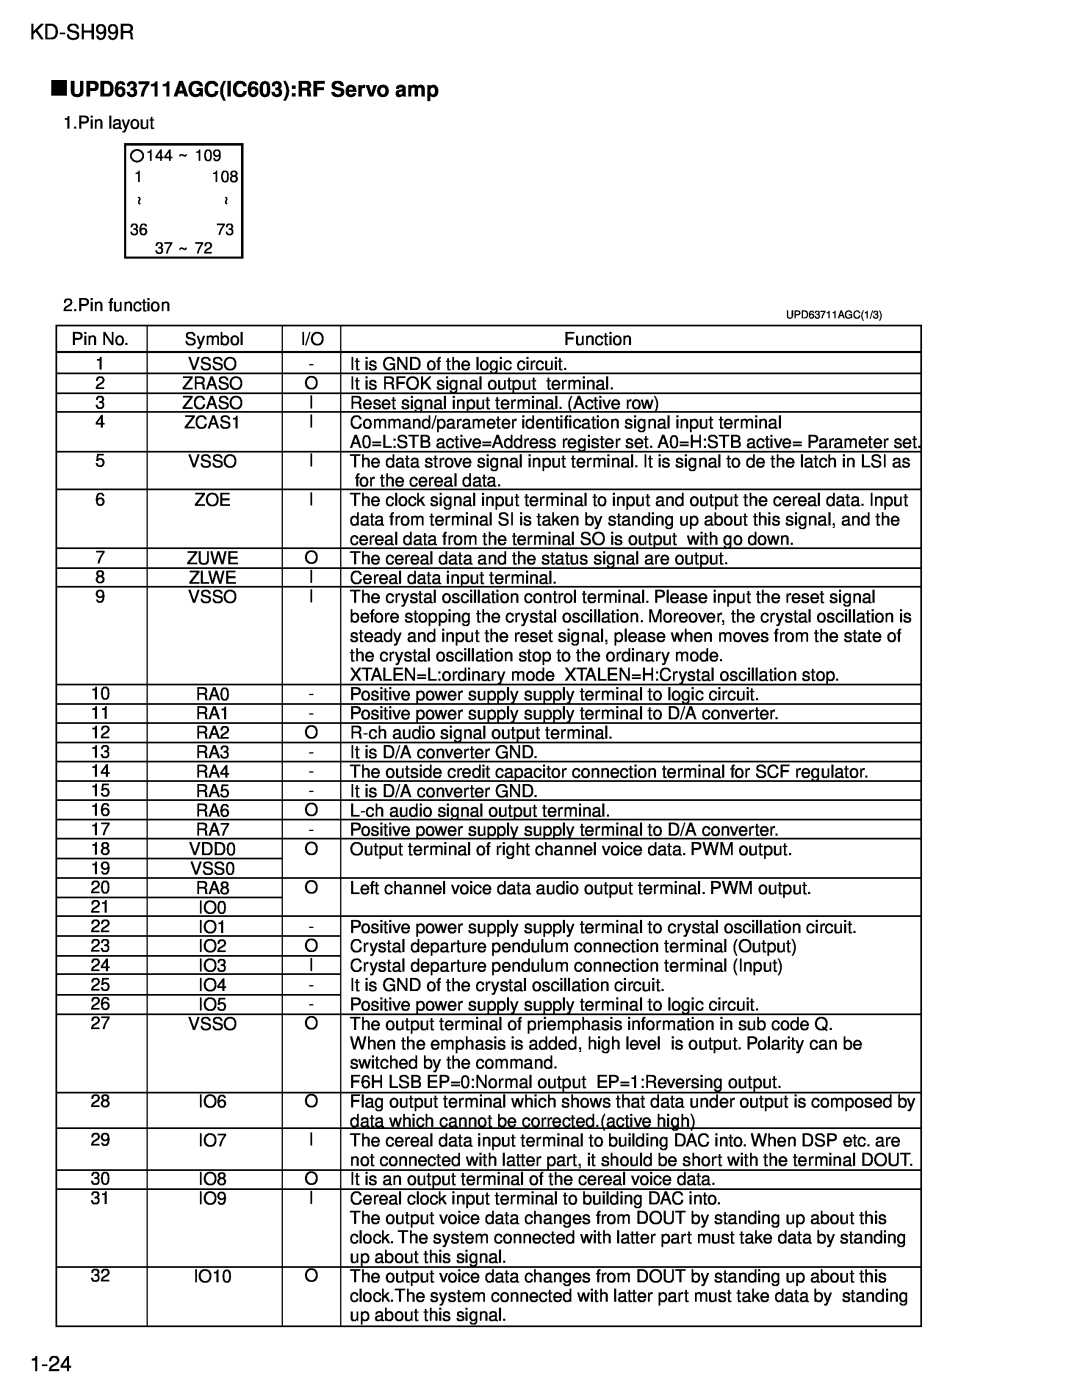 JVC KD-SH99R service manual UPD63711AGCIC603 RF Servo amp, 1-24 